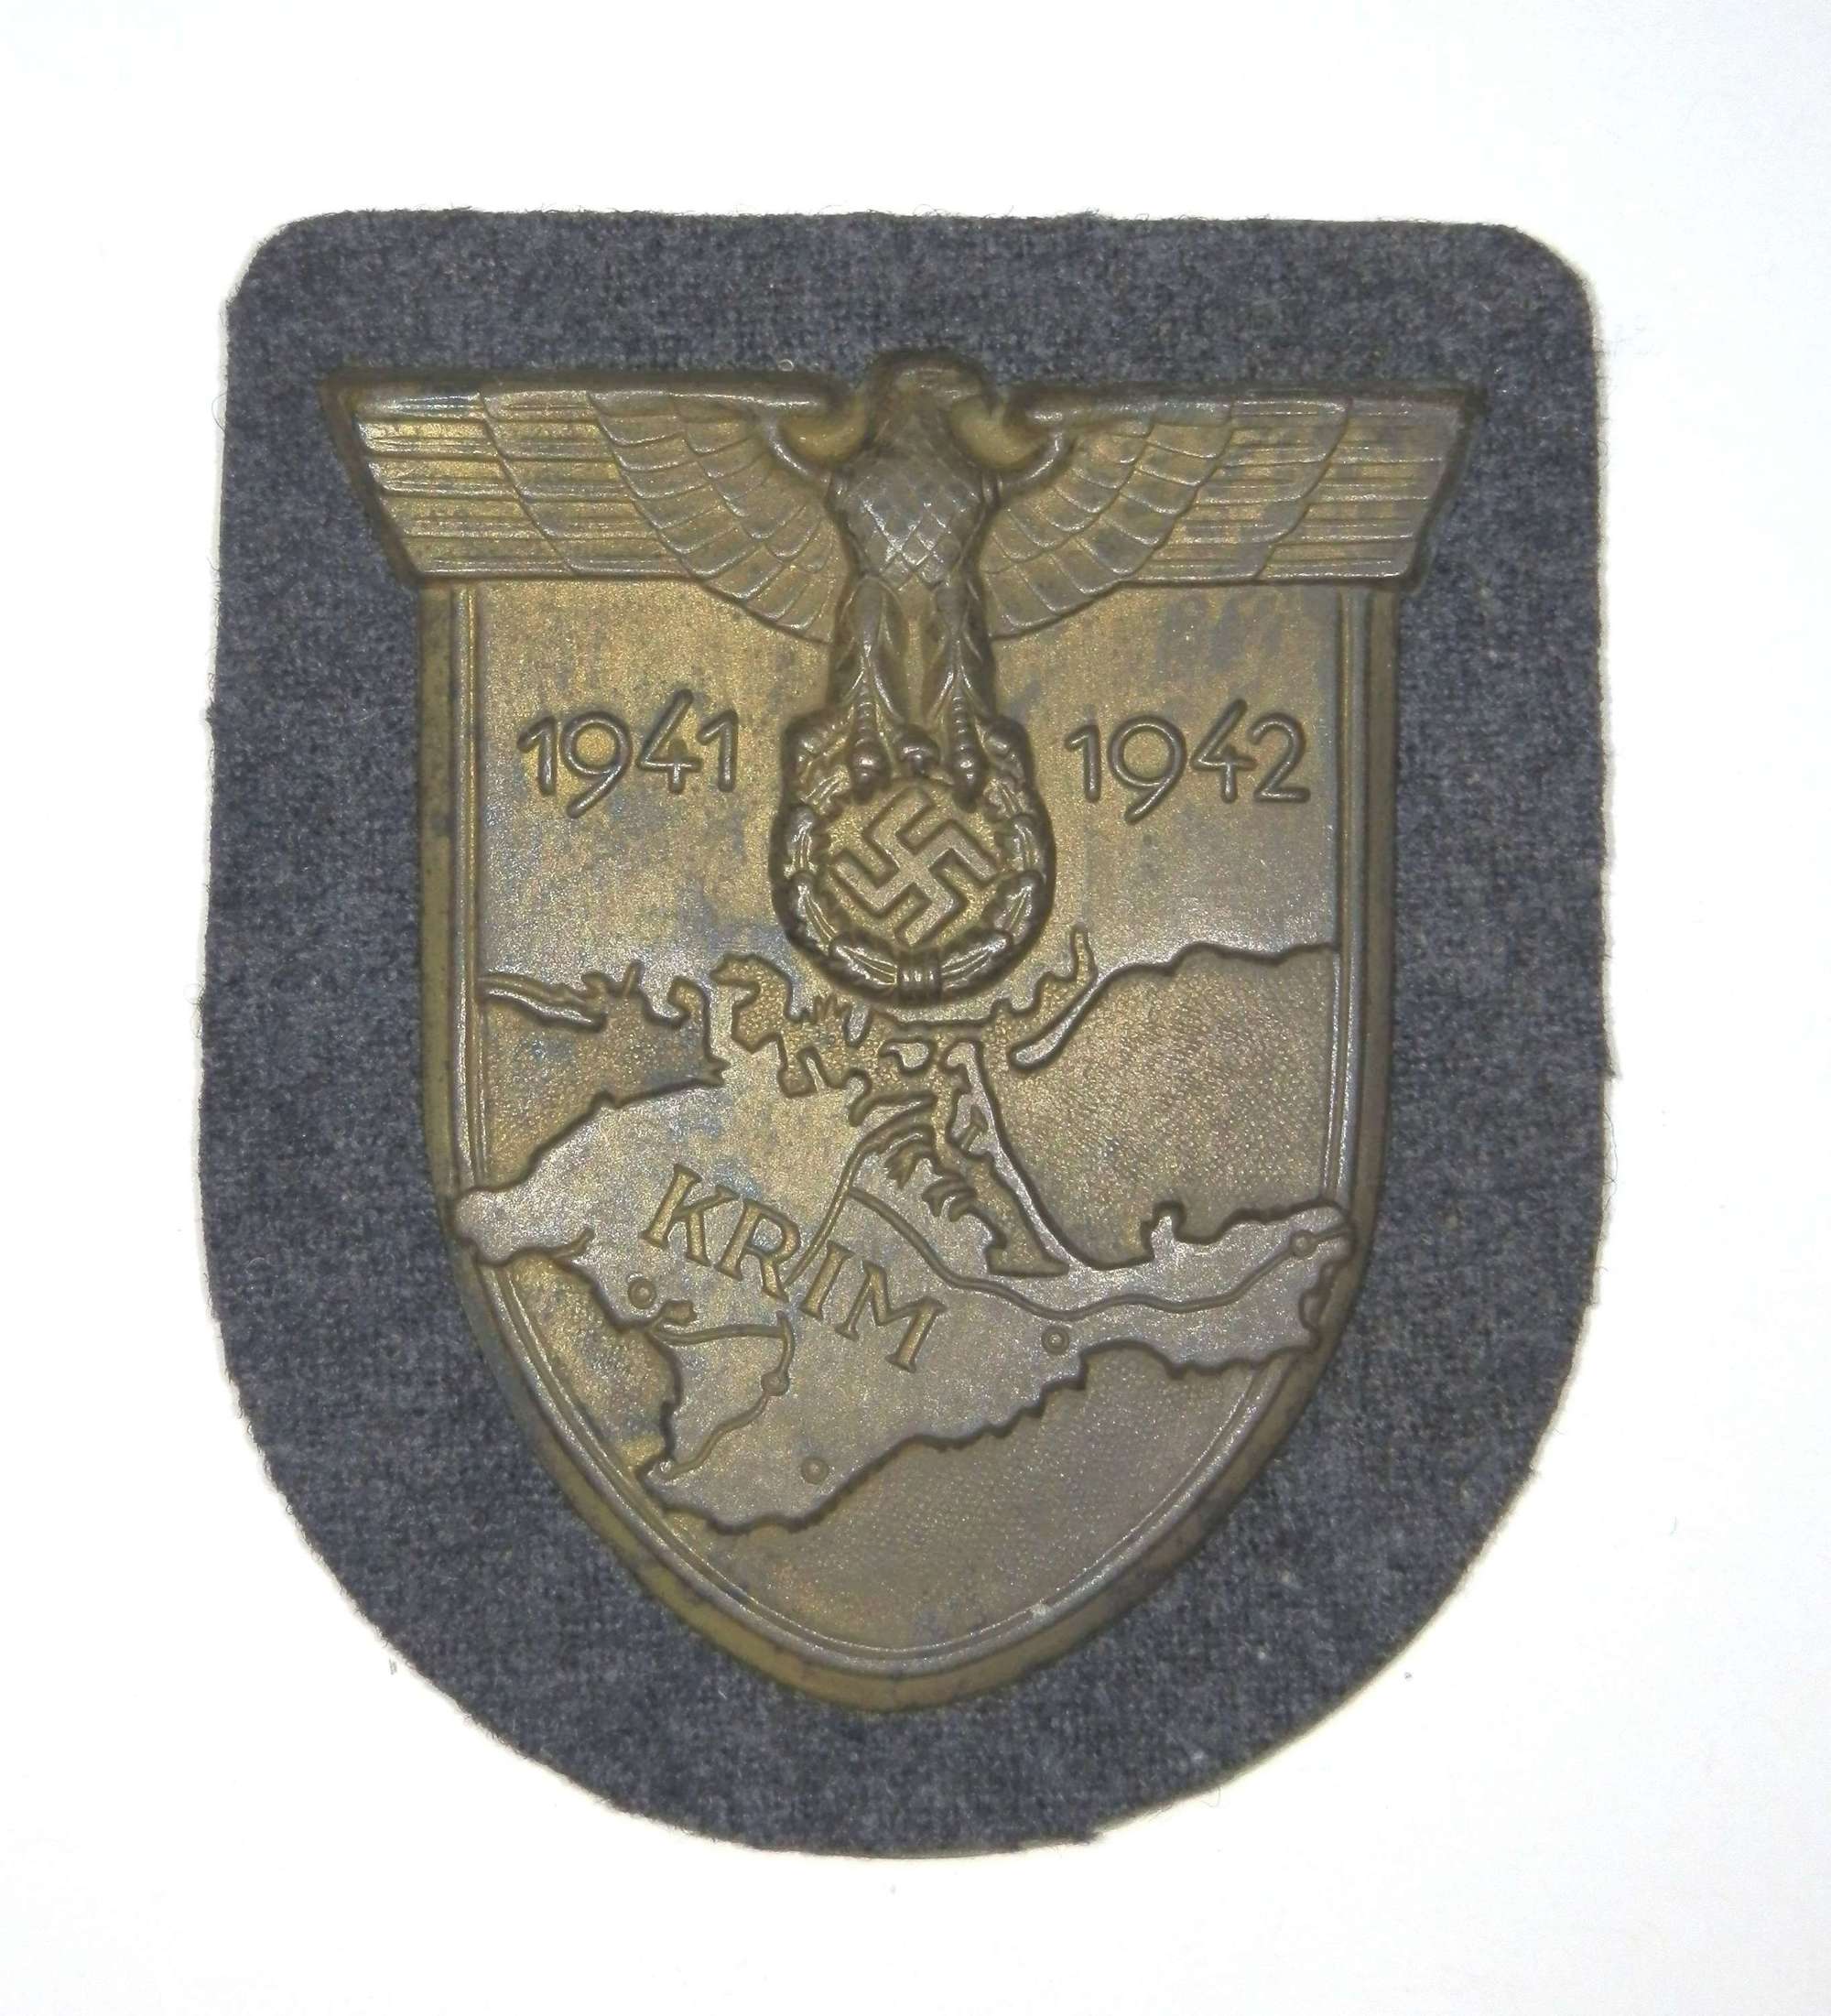 Crimea Shield, Luftwaffe issue.